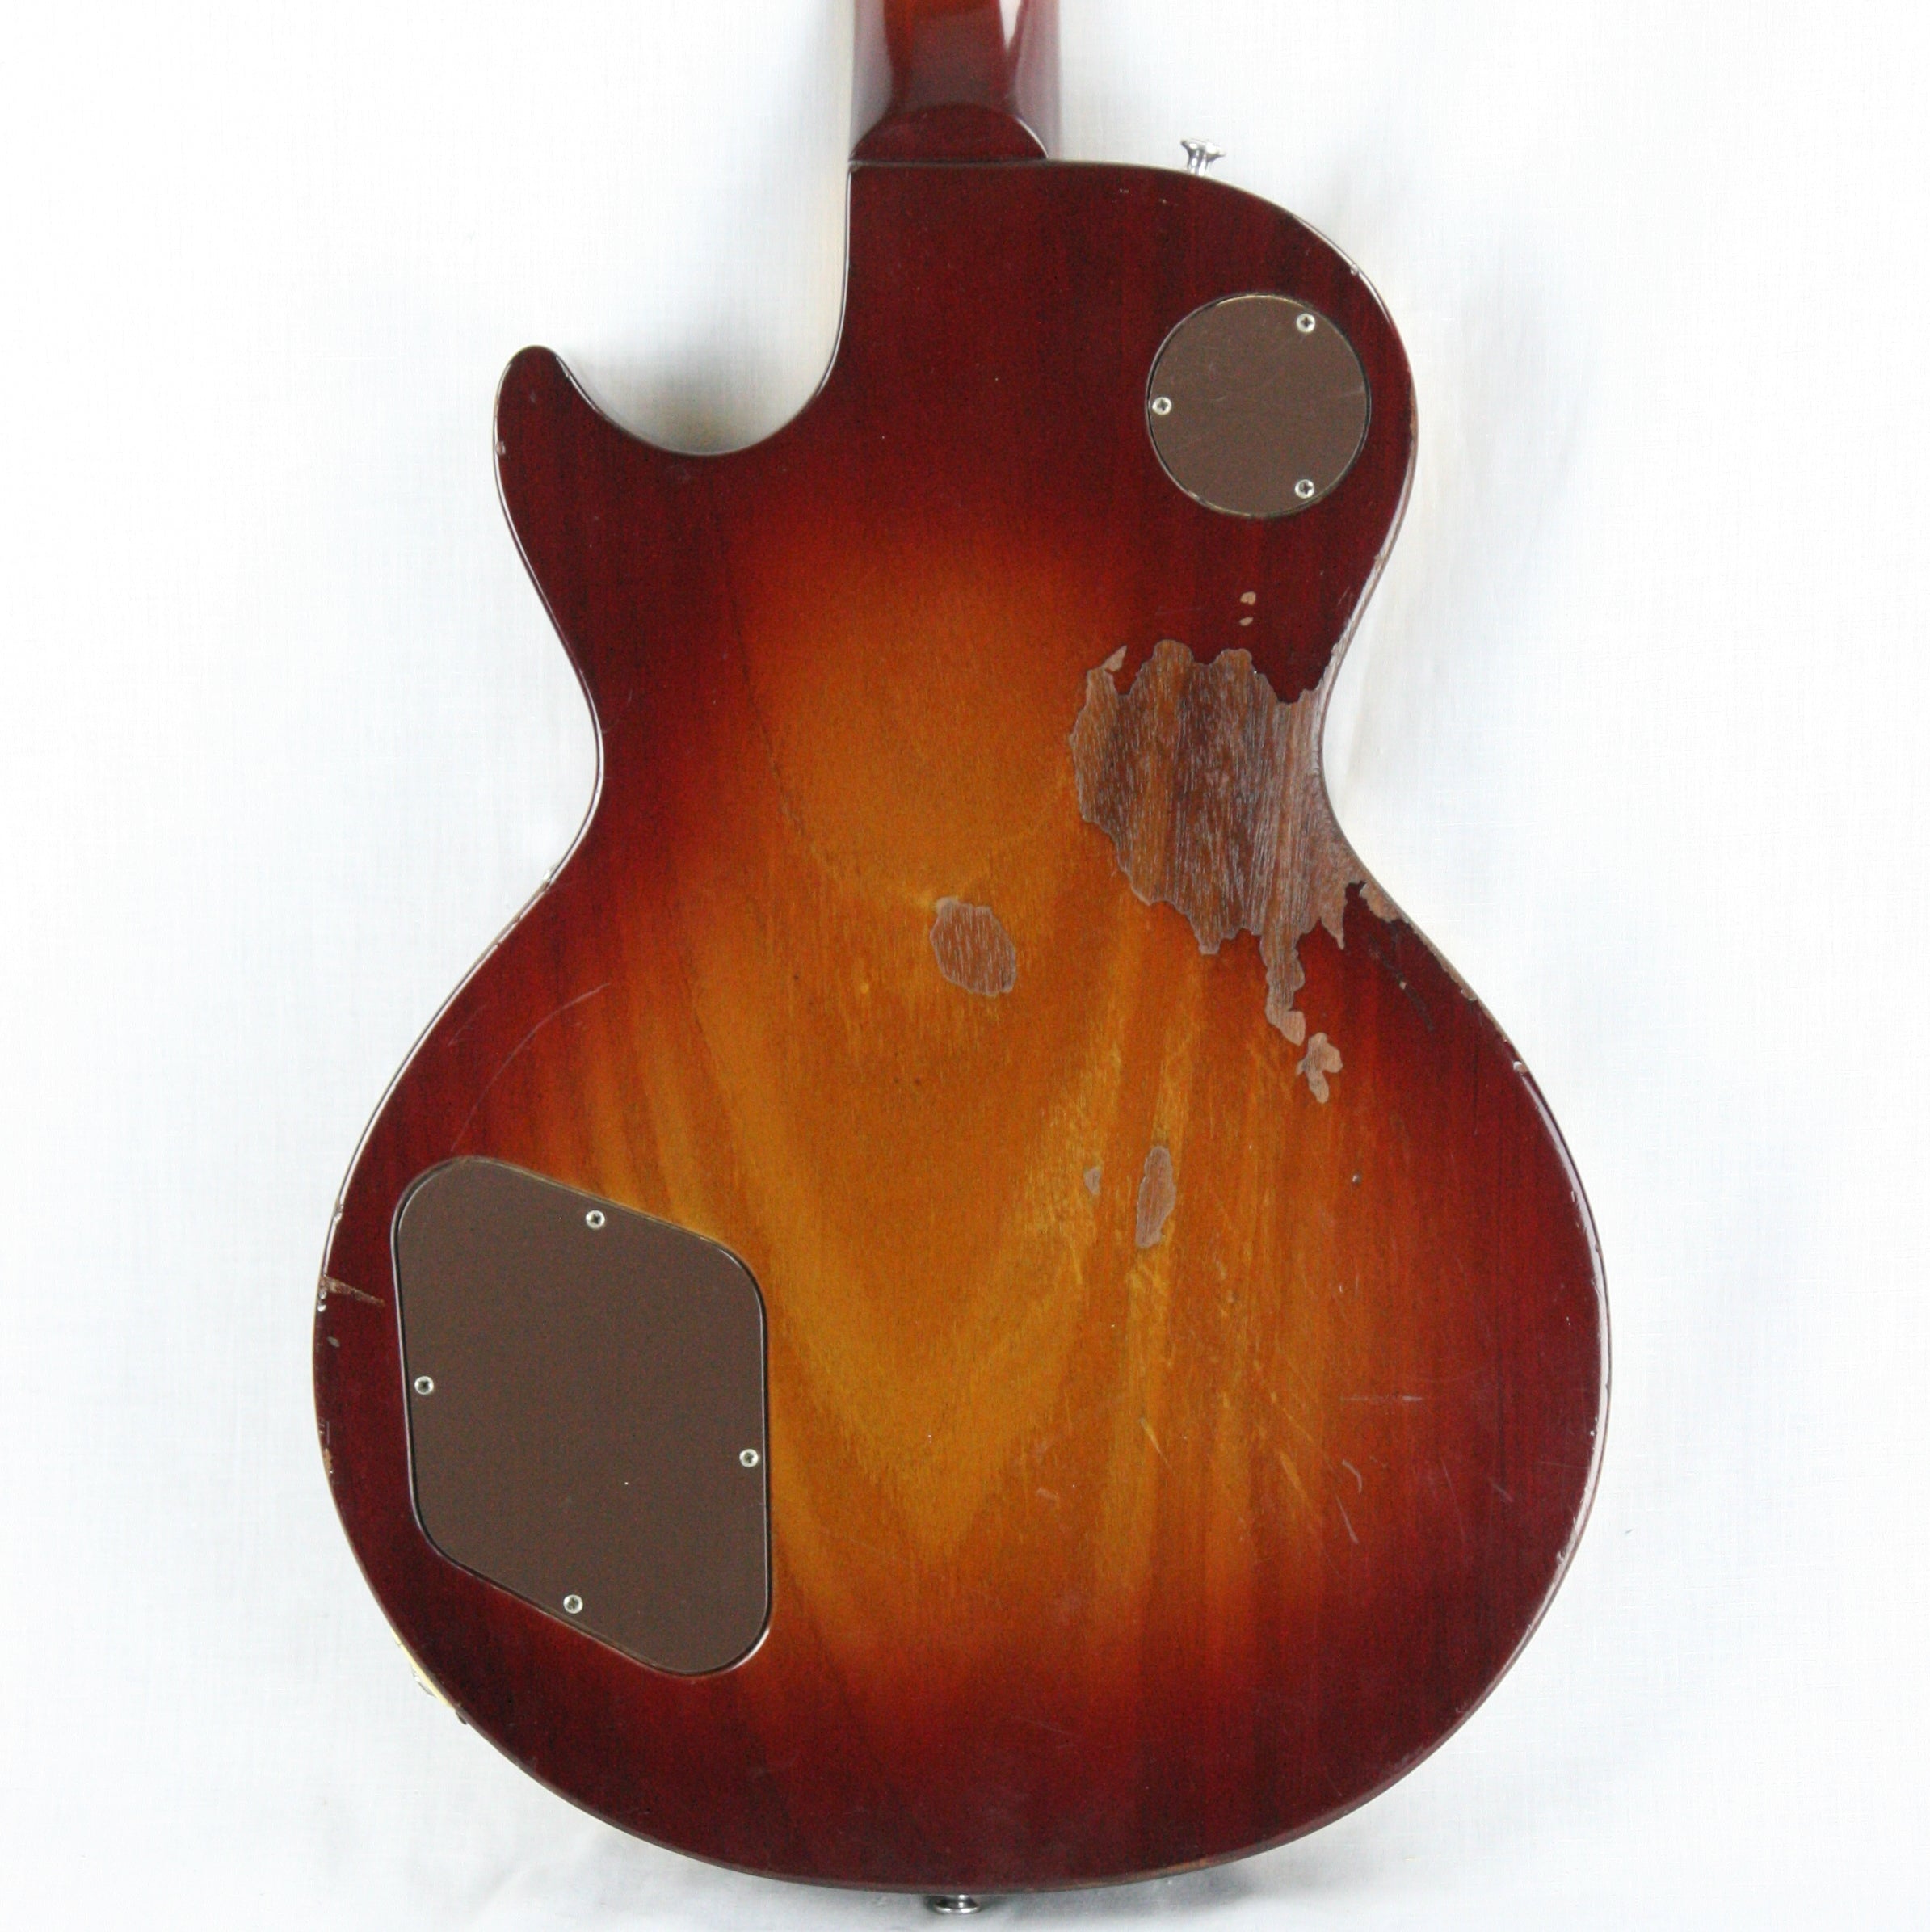 *SOLD*  1971 Gibson Les Paul Deluxe Cherry Sunburst! Embossed Mini-Humbuckers! Repaired H/S